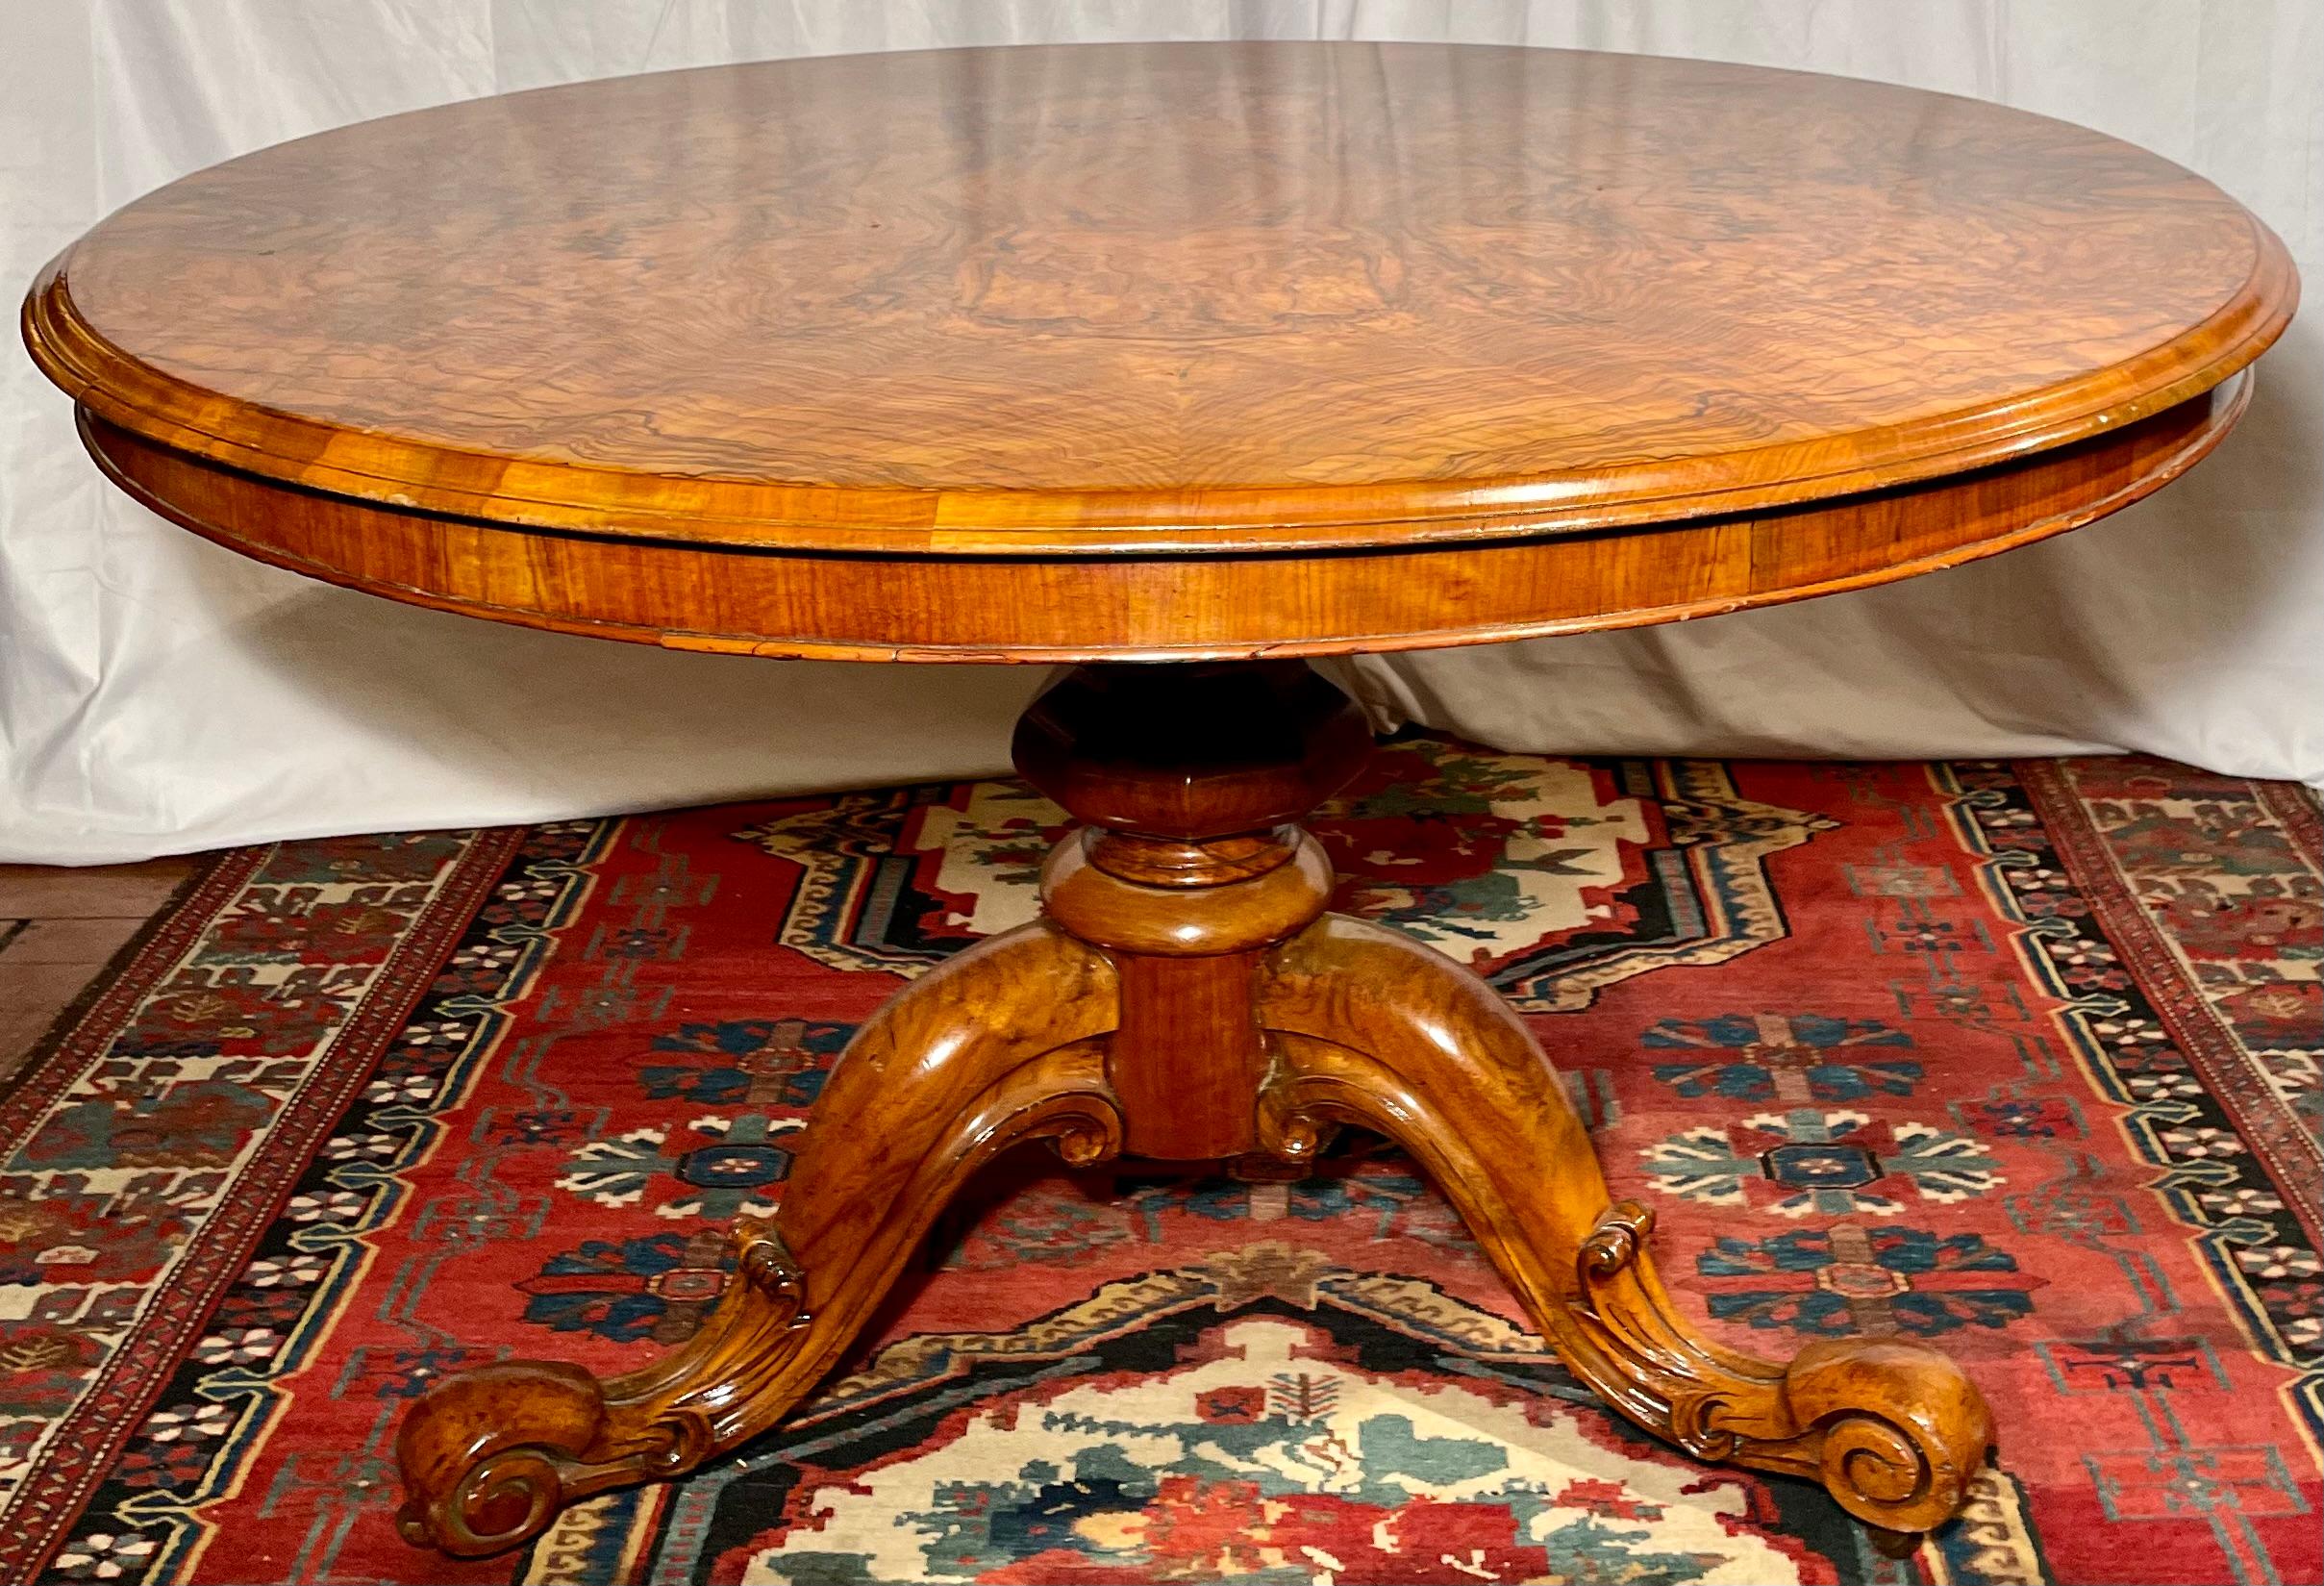 Antique English burled walnut center table, circa 1870.